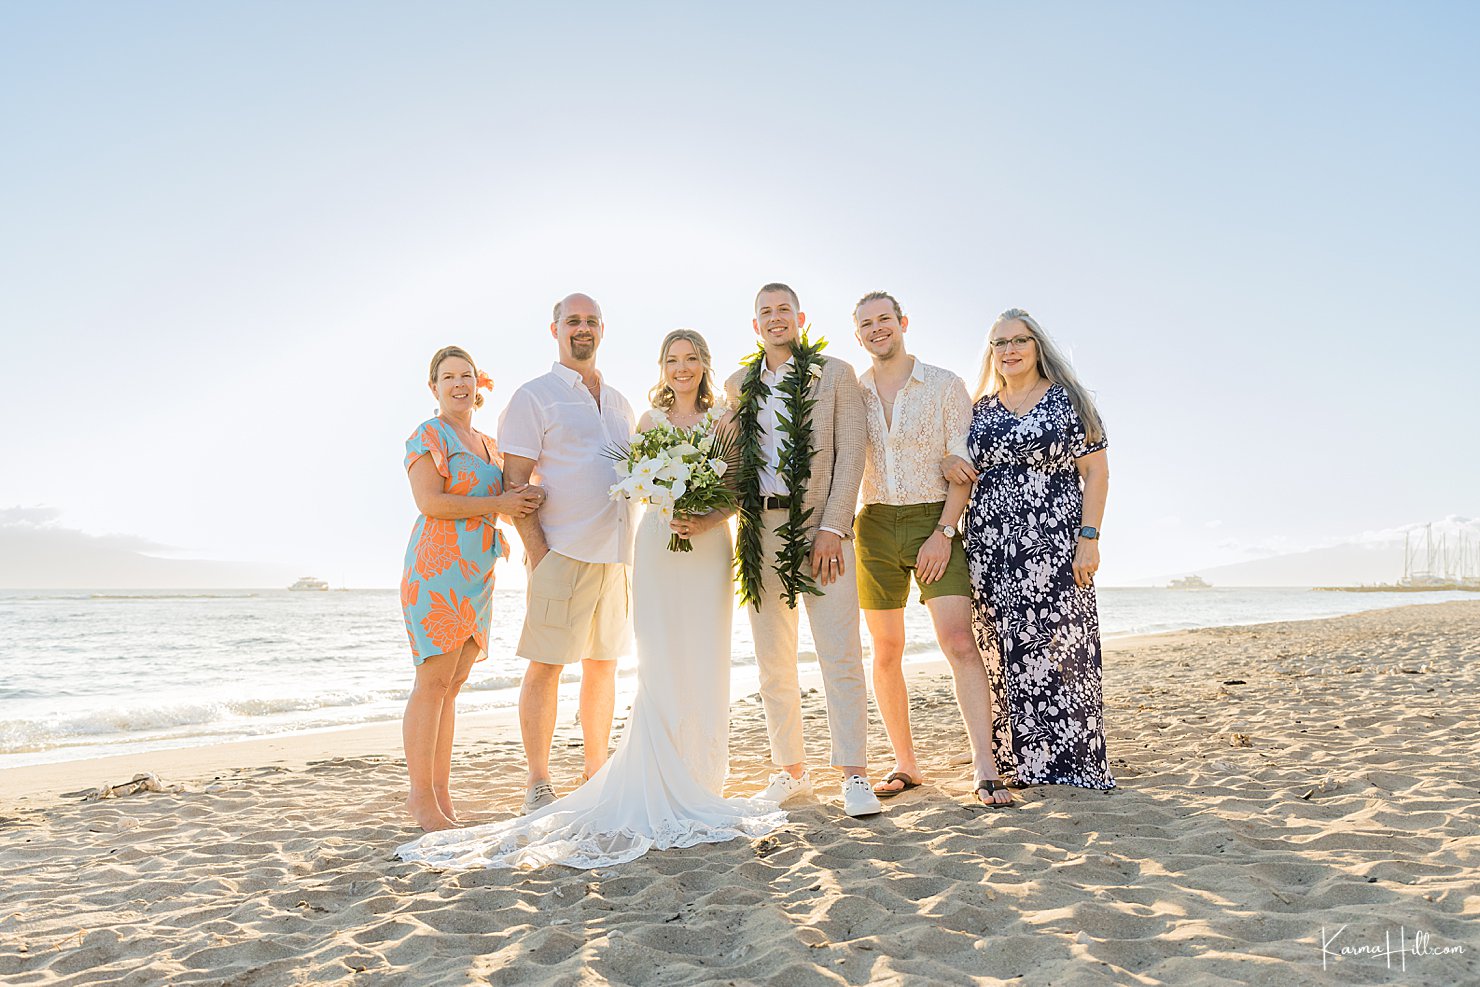 Guests at a Maui beach wedding